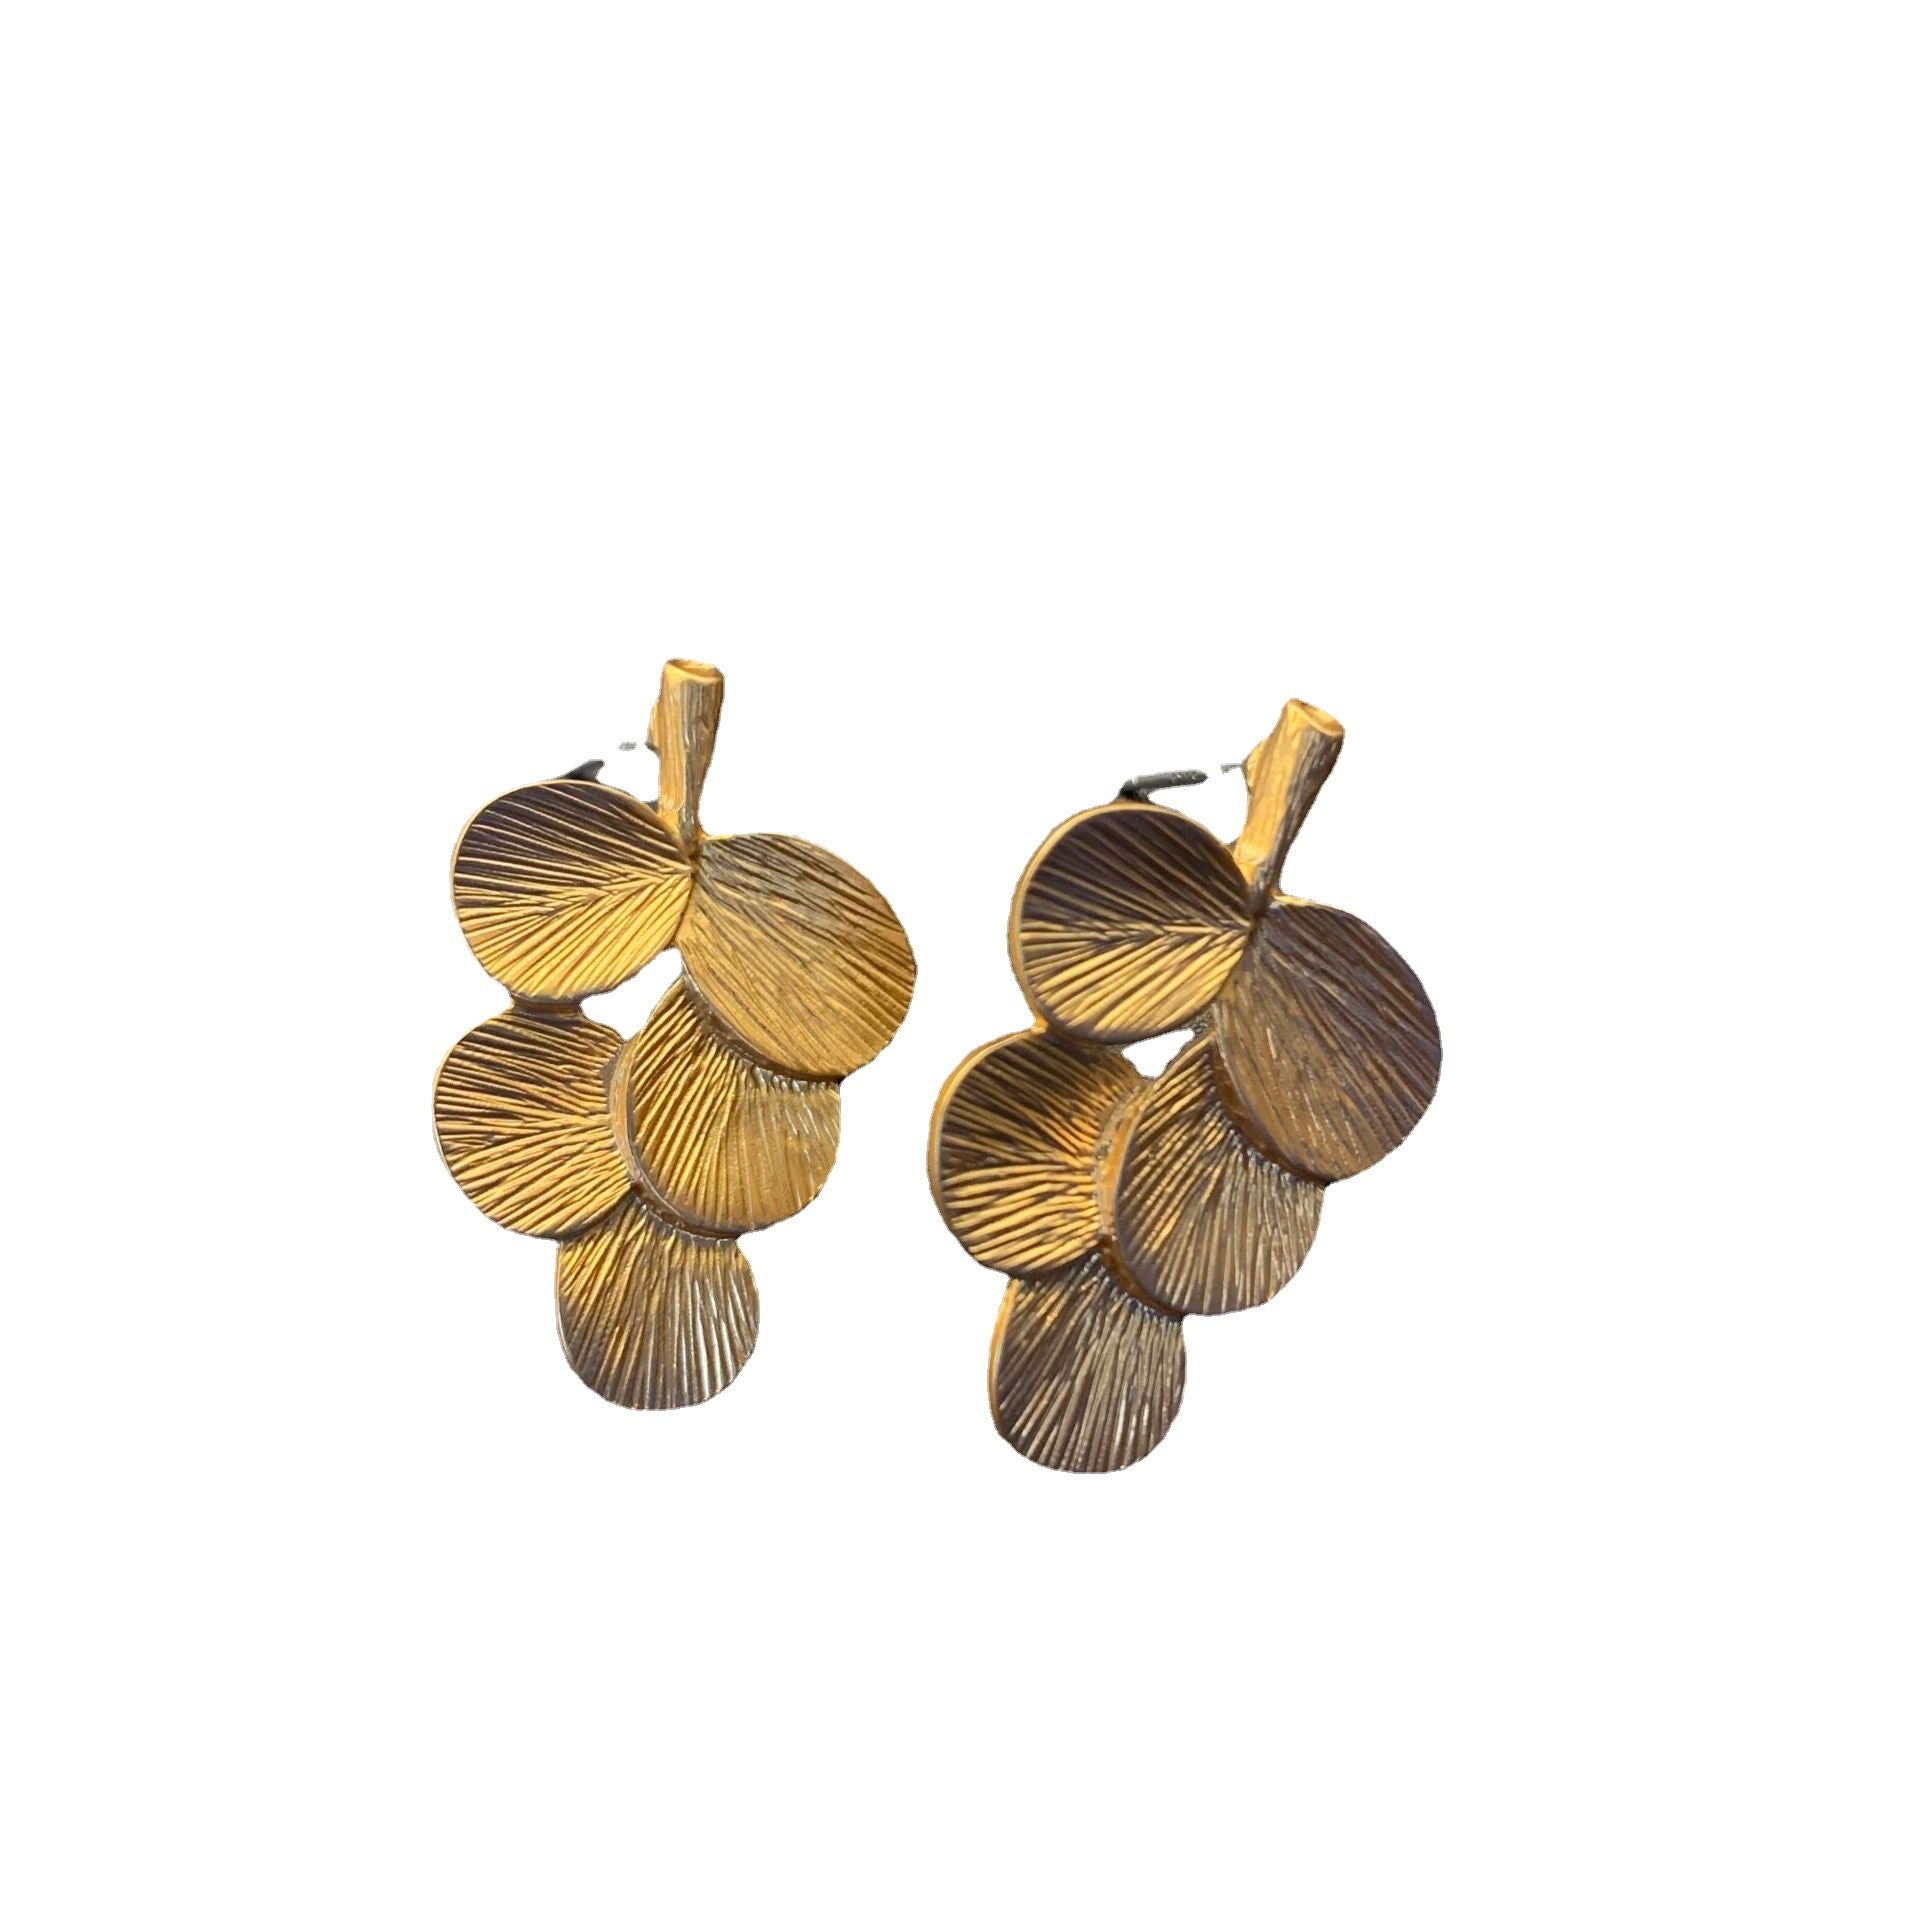 Fashionable Vintage Minimalist Leaf-Shaped Earrings for Commuting  UponBasics   